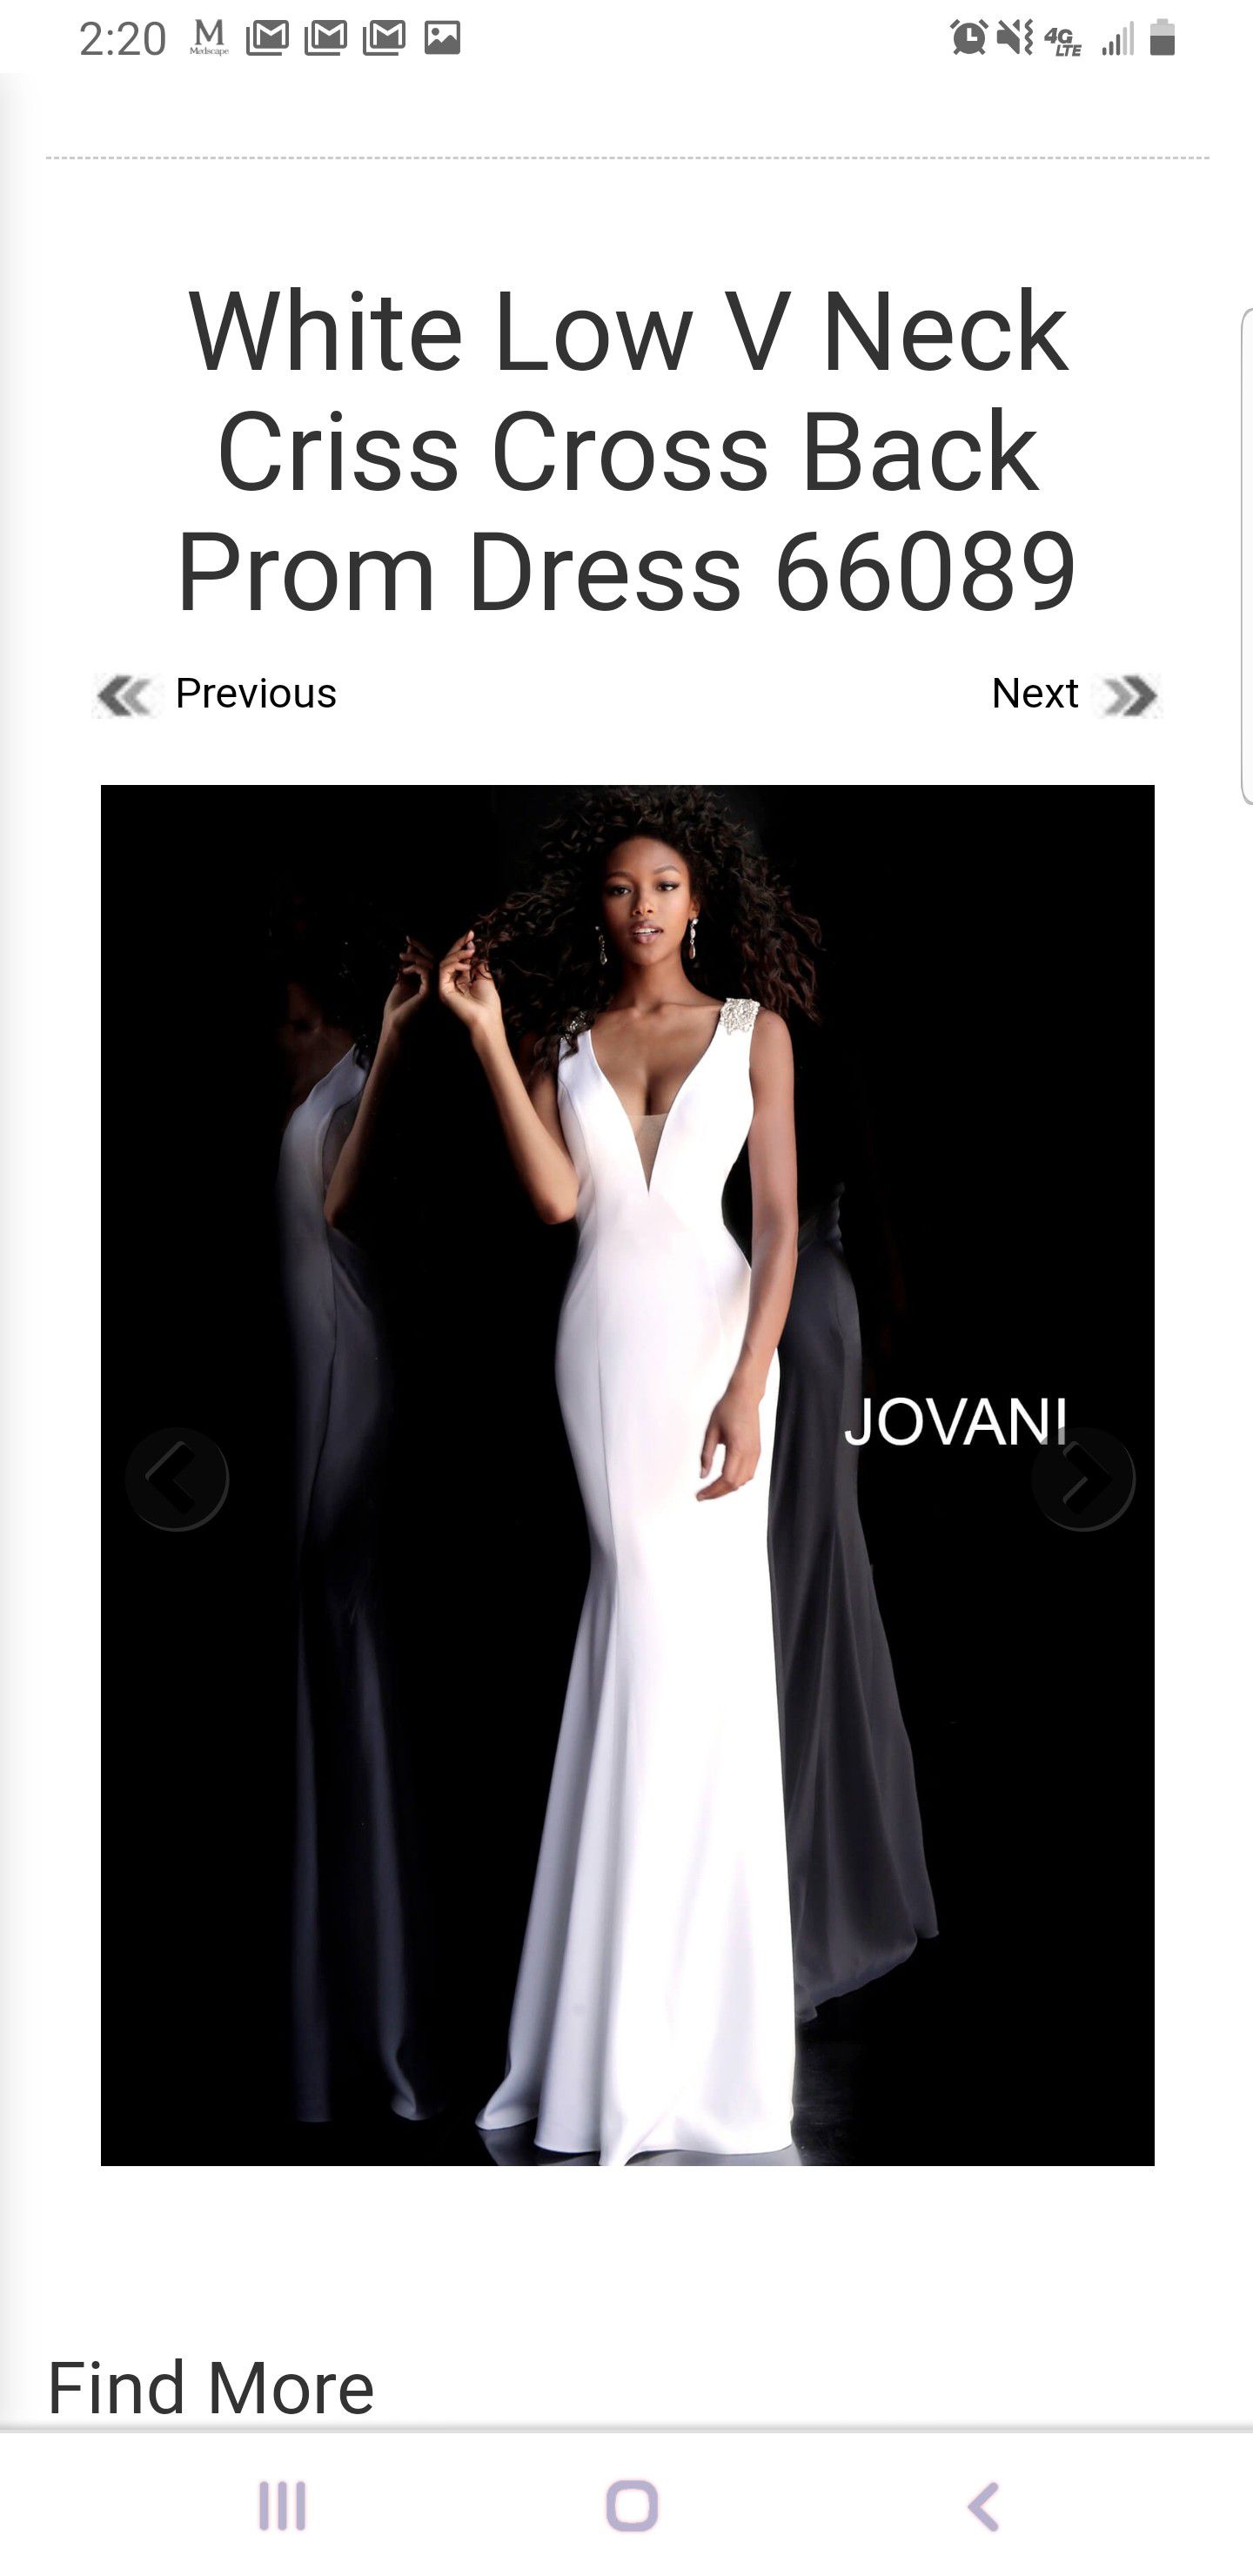 $490 for beautiful, sexy, size 2 Jovani Long dress 66089 White low Vneck Criss Cross Back Prom Dress.